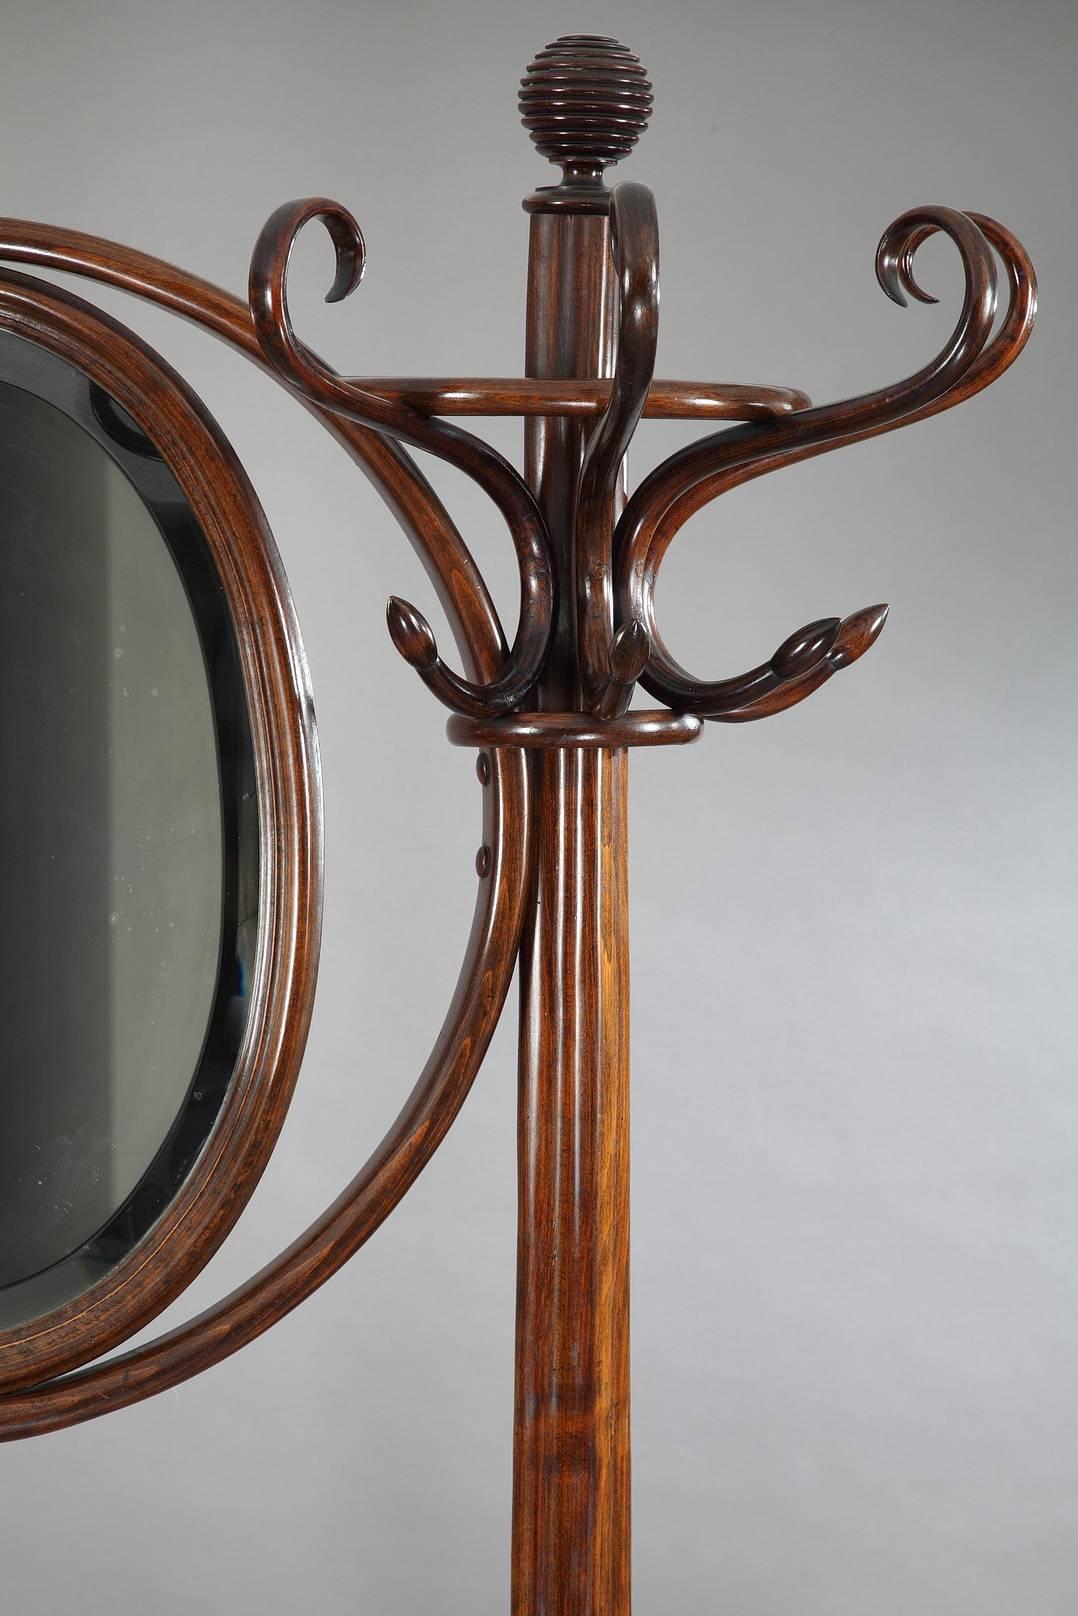 Mirror Late 19th Century Thonet Double Coat Rack, Art Nouveau Period